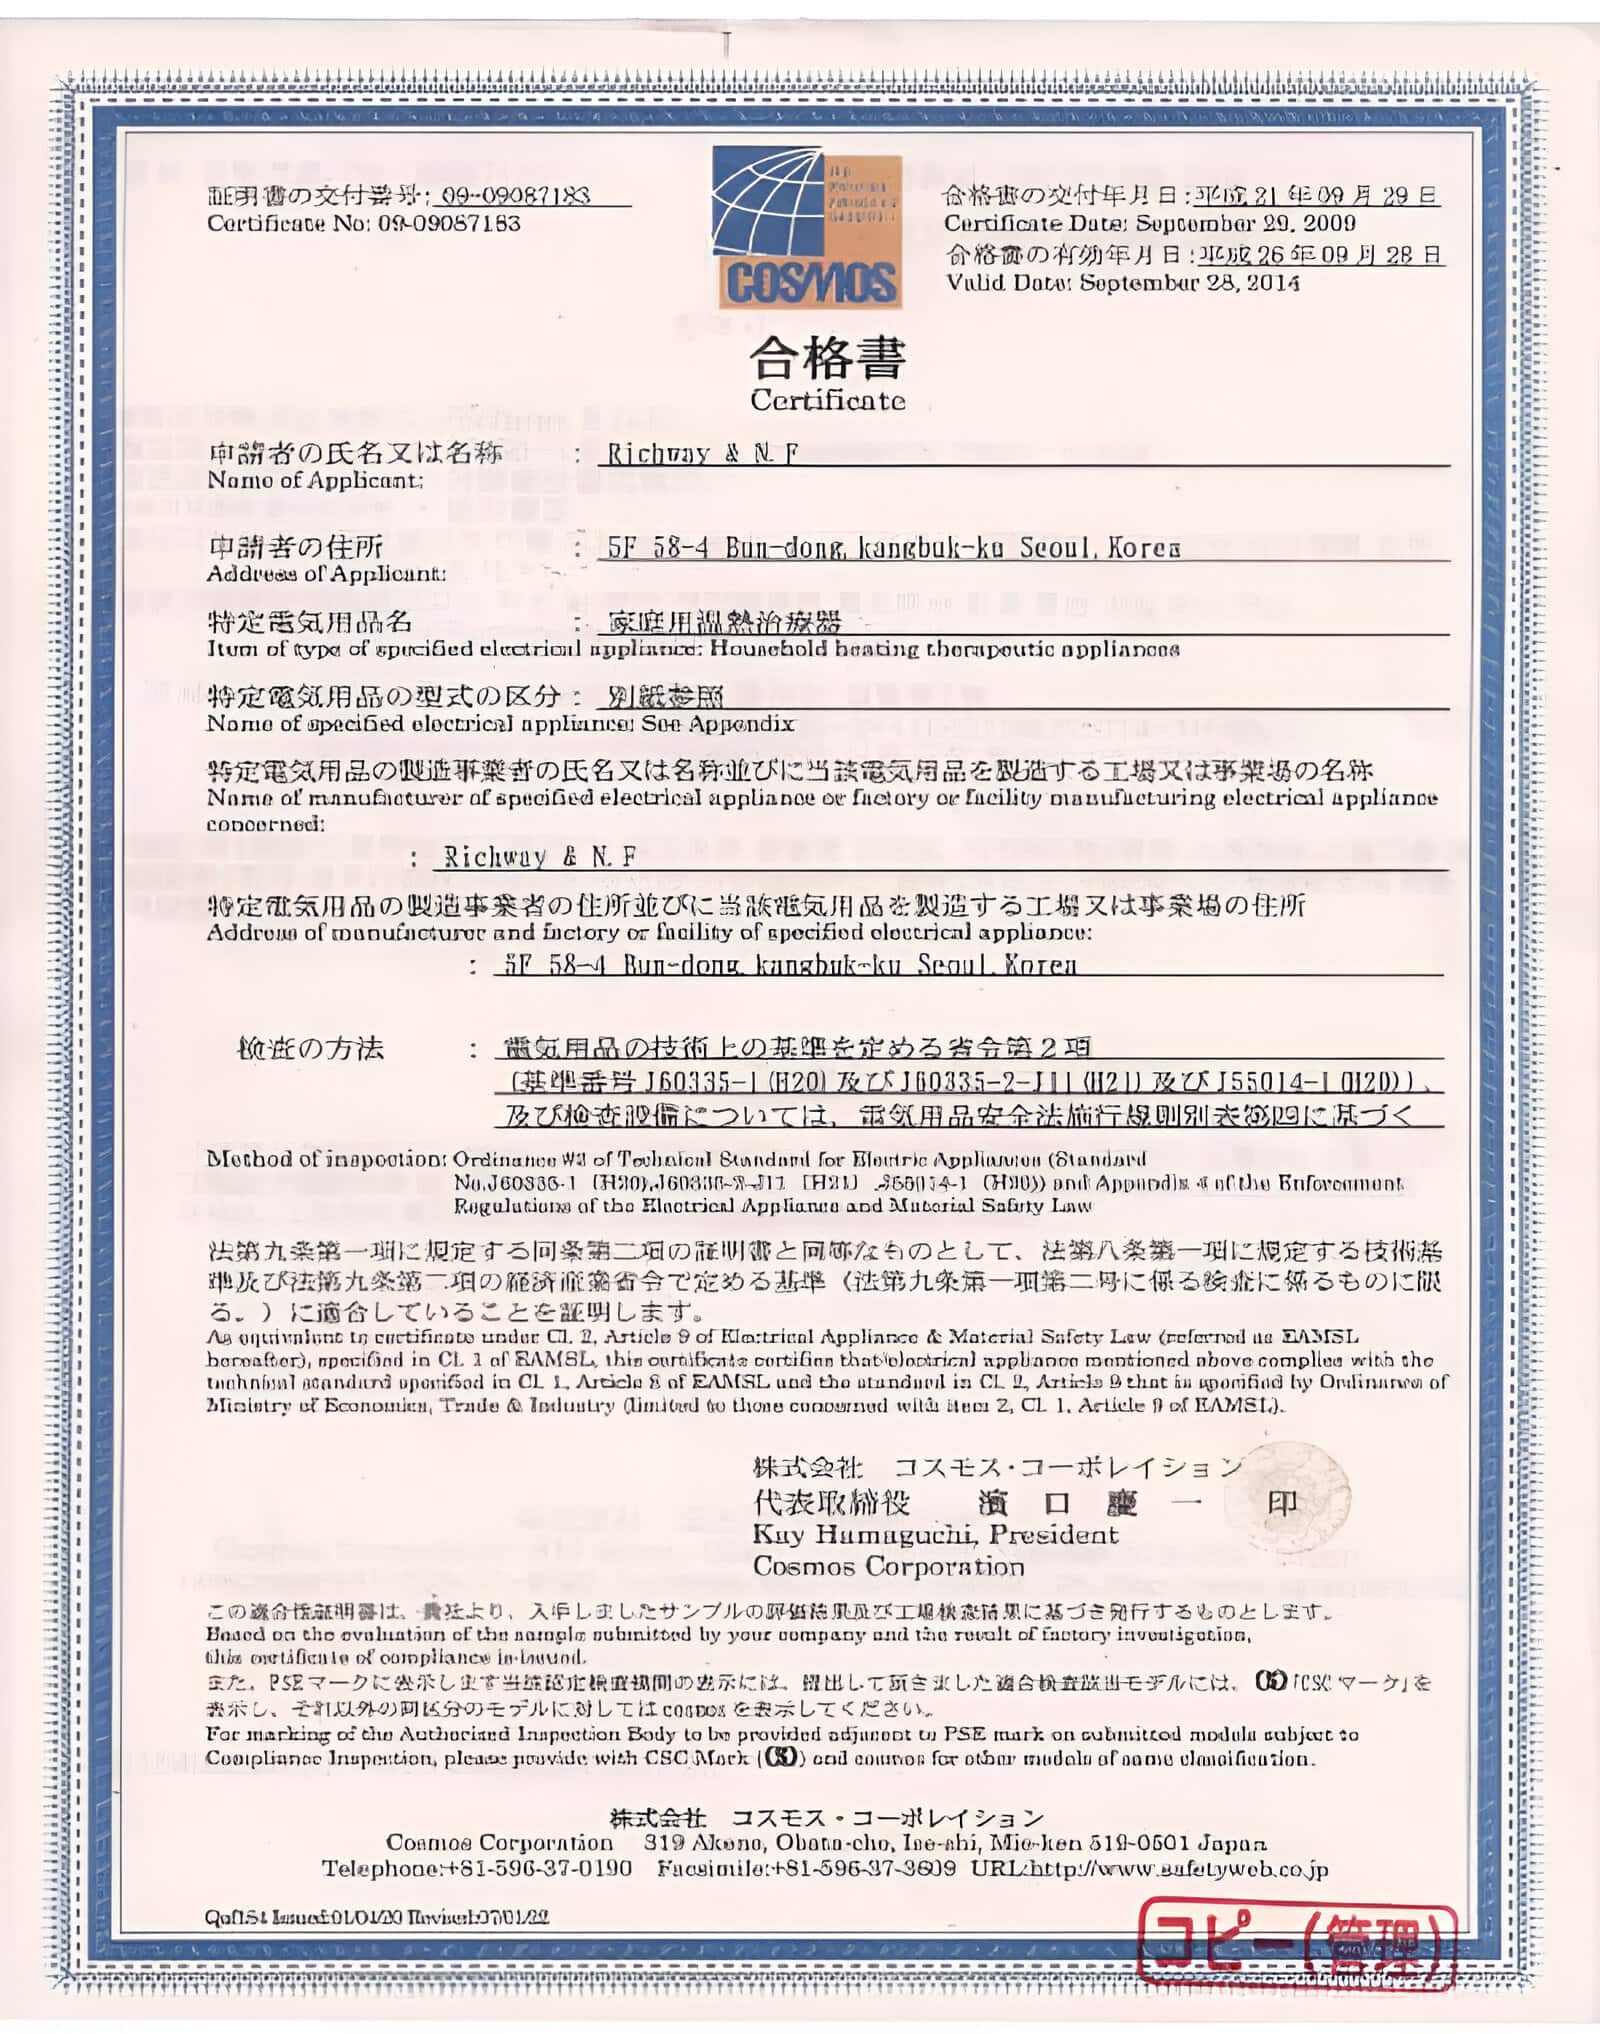 BIomat 7000mx medical device certification Japan